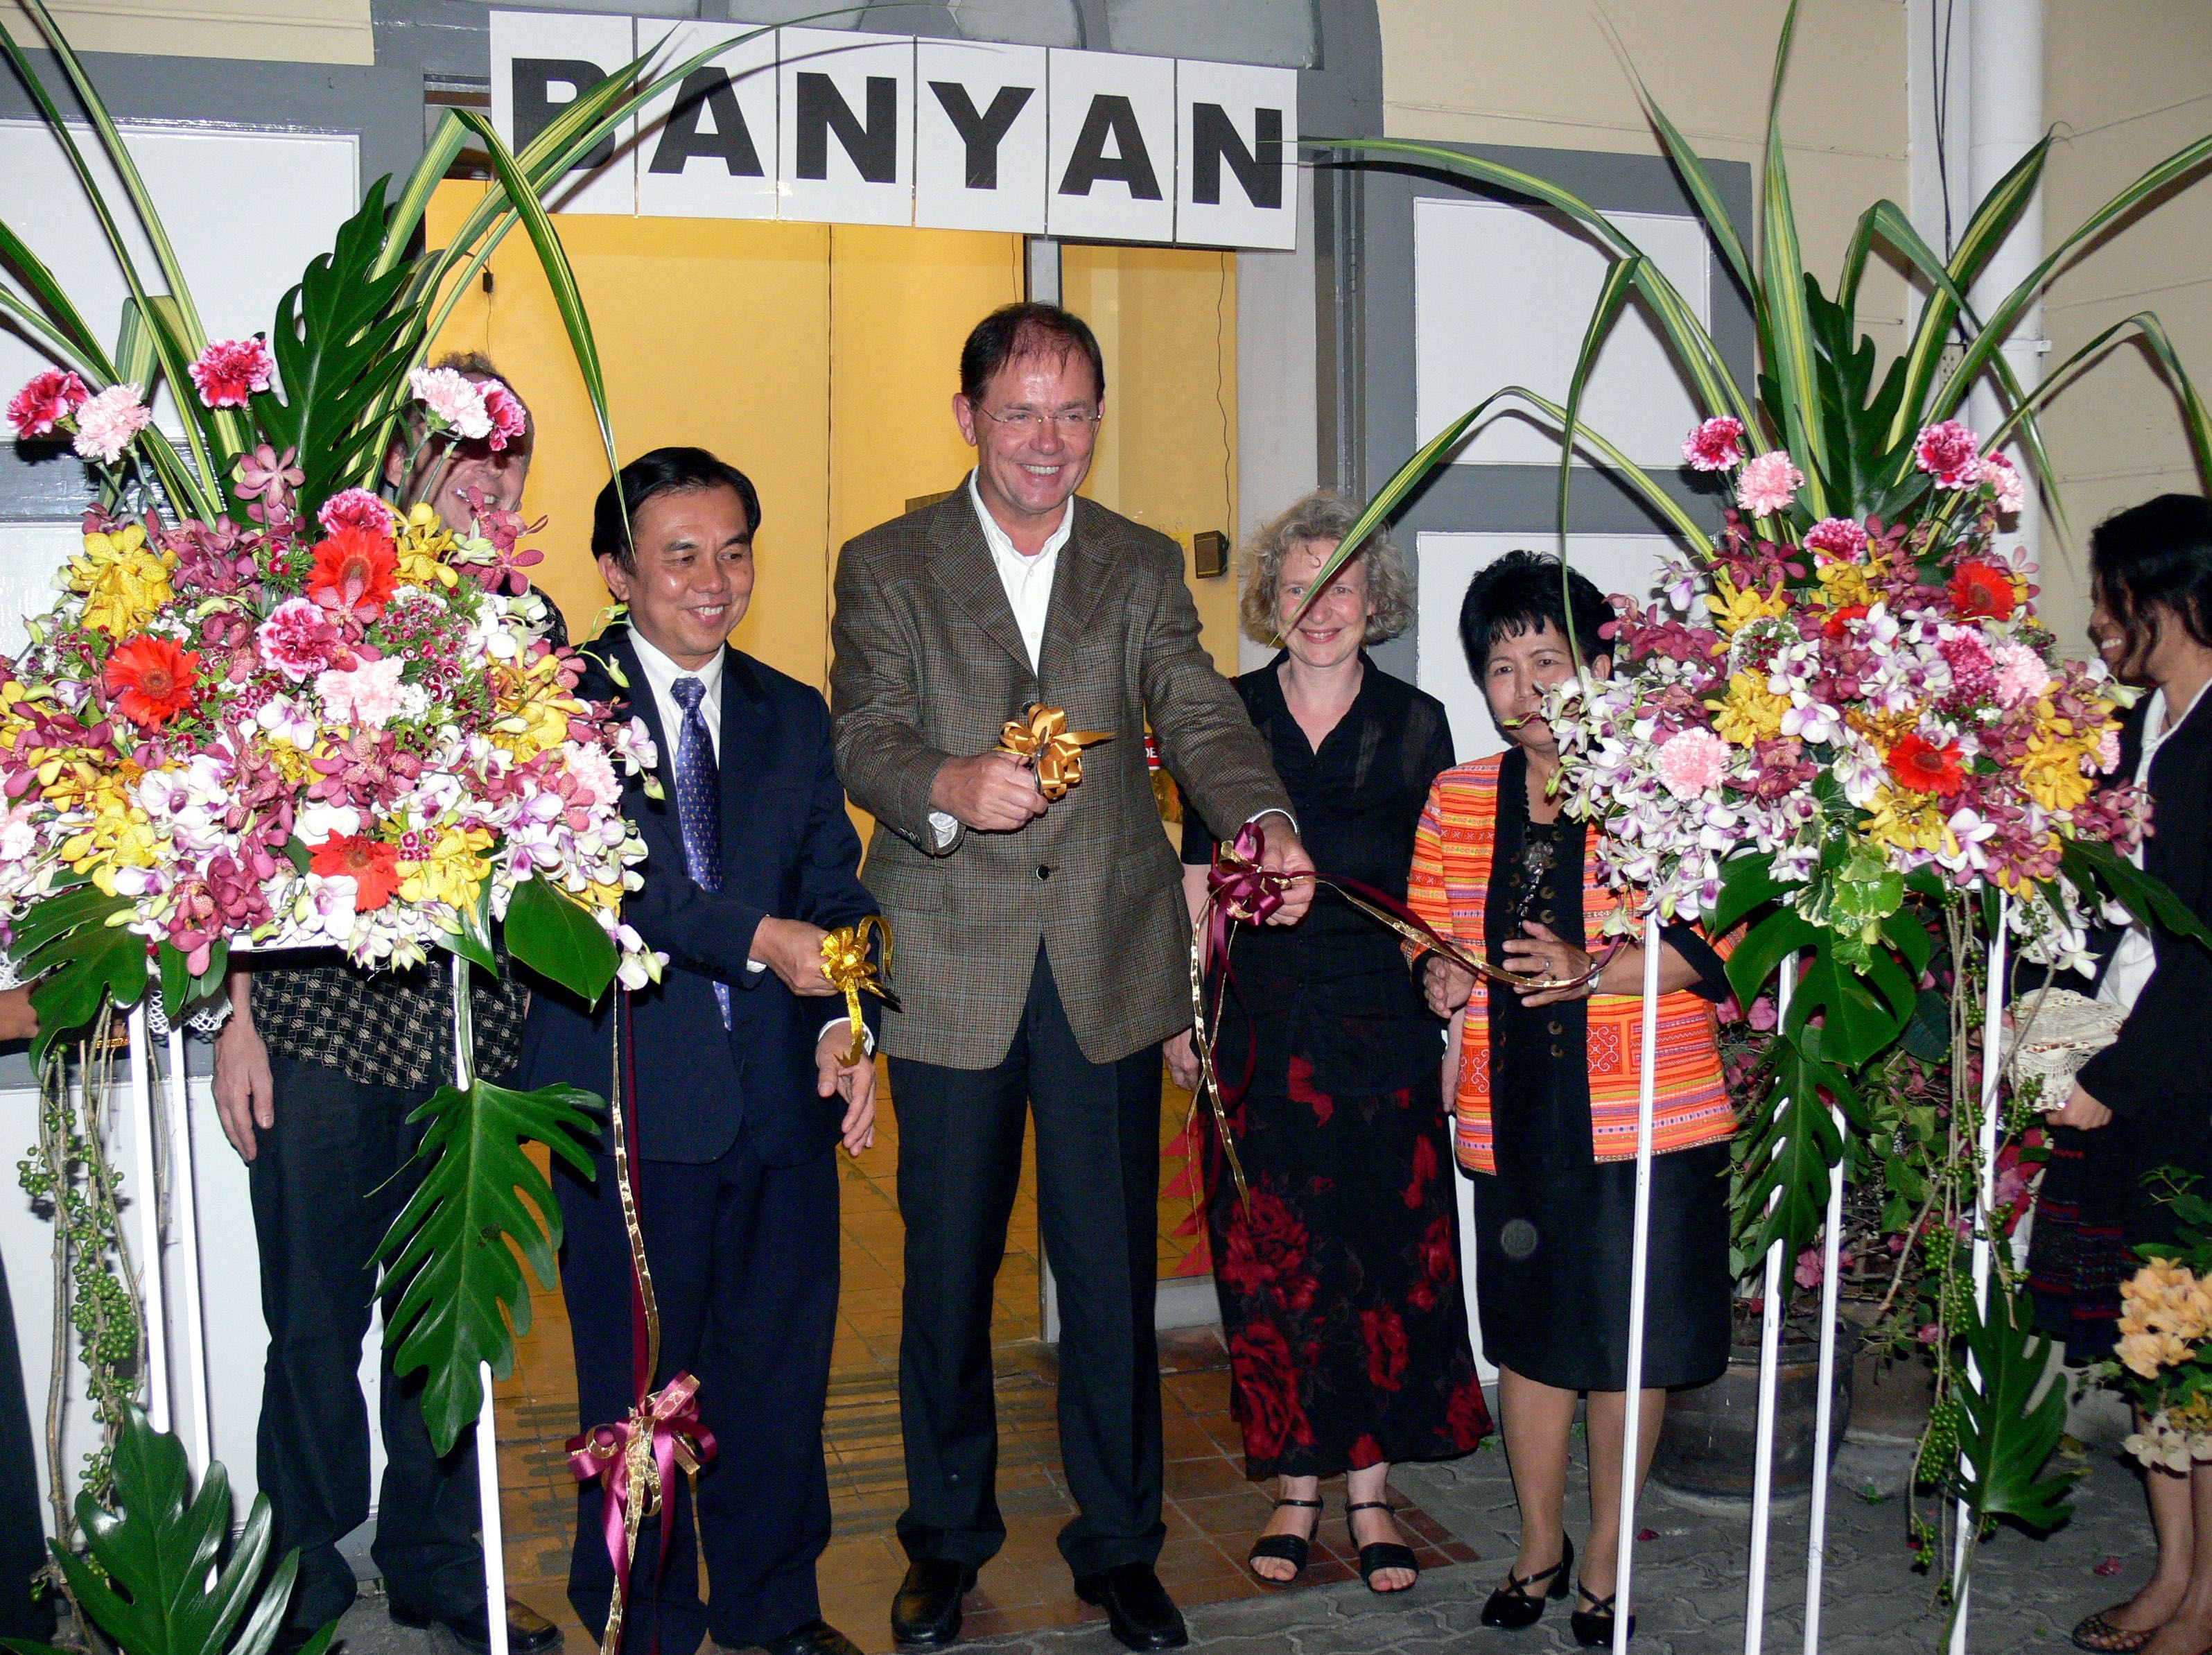 The Banyan Tree - Vernissage/opening National Gallery Bangkok 2009